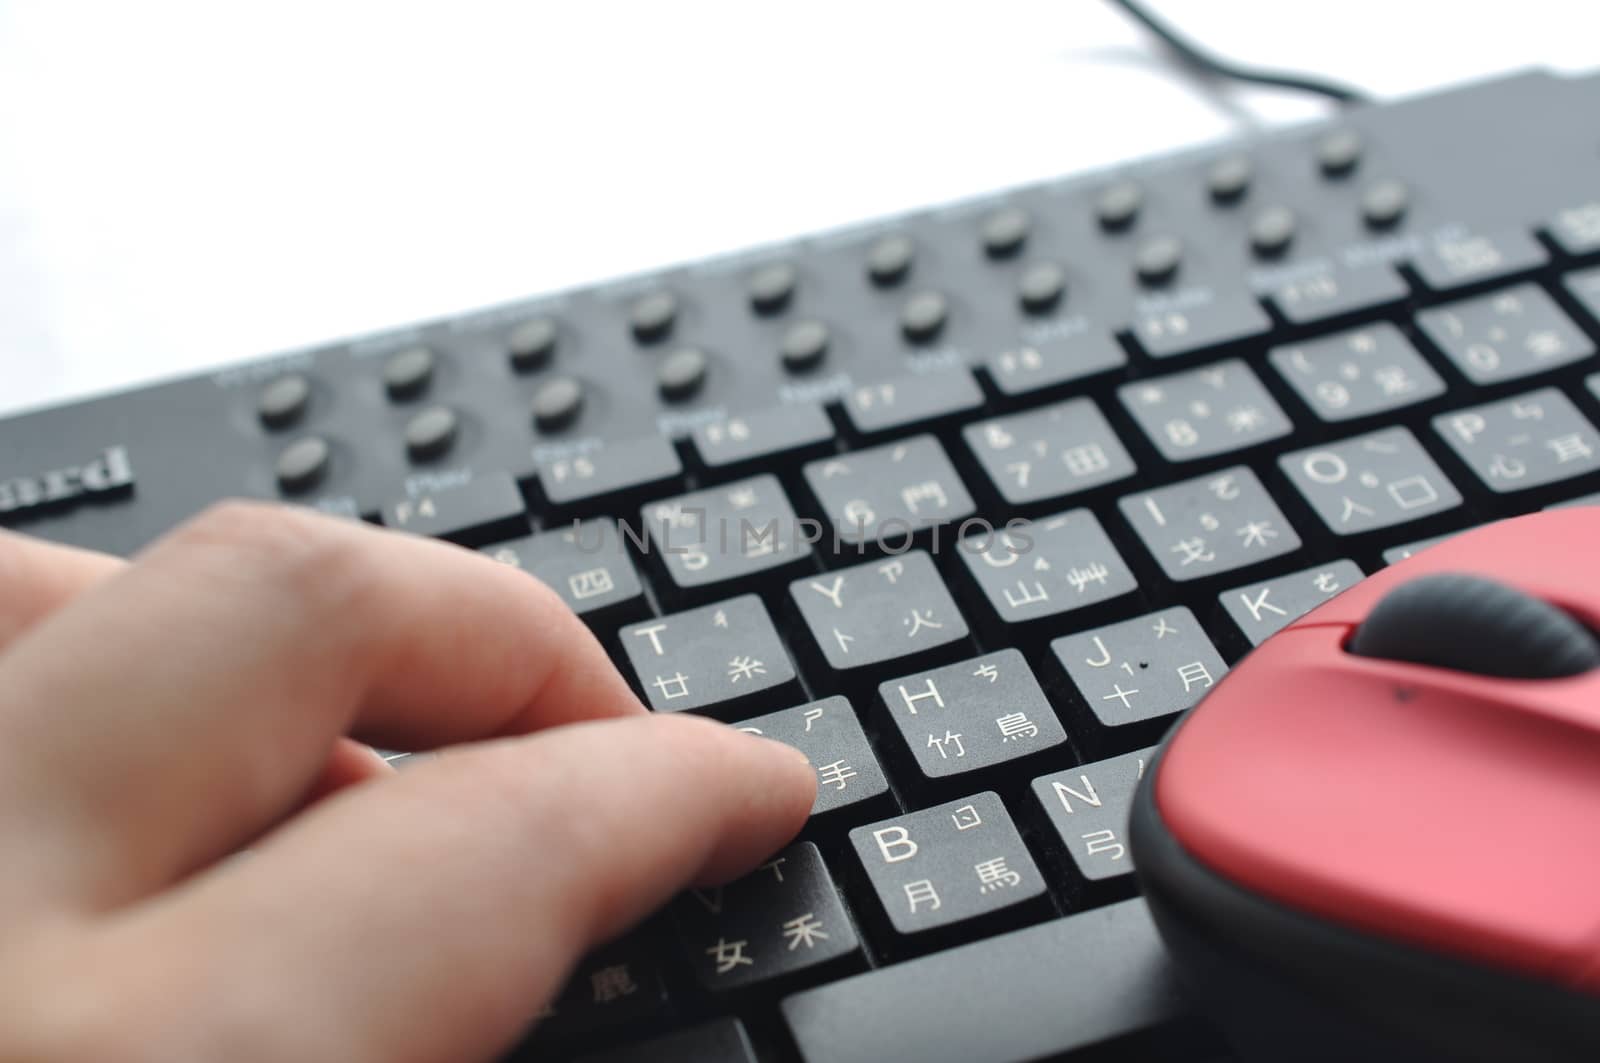 Typing on Chinese keyboard; focus on keyboard